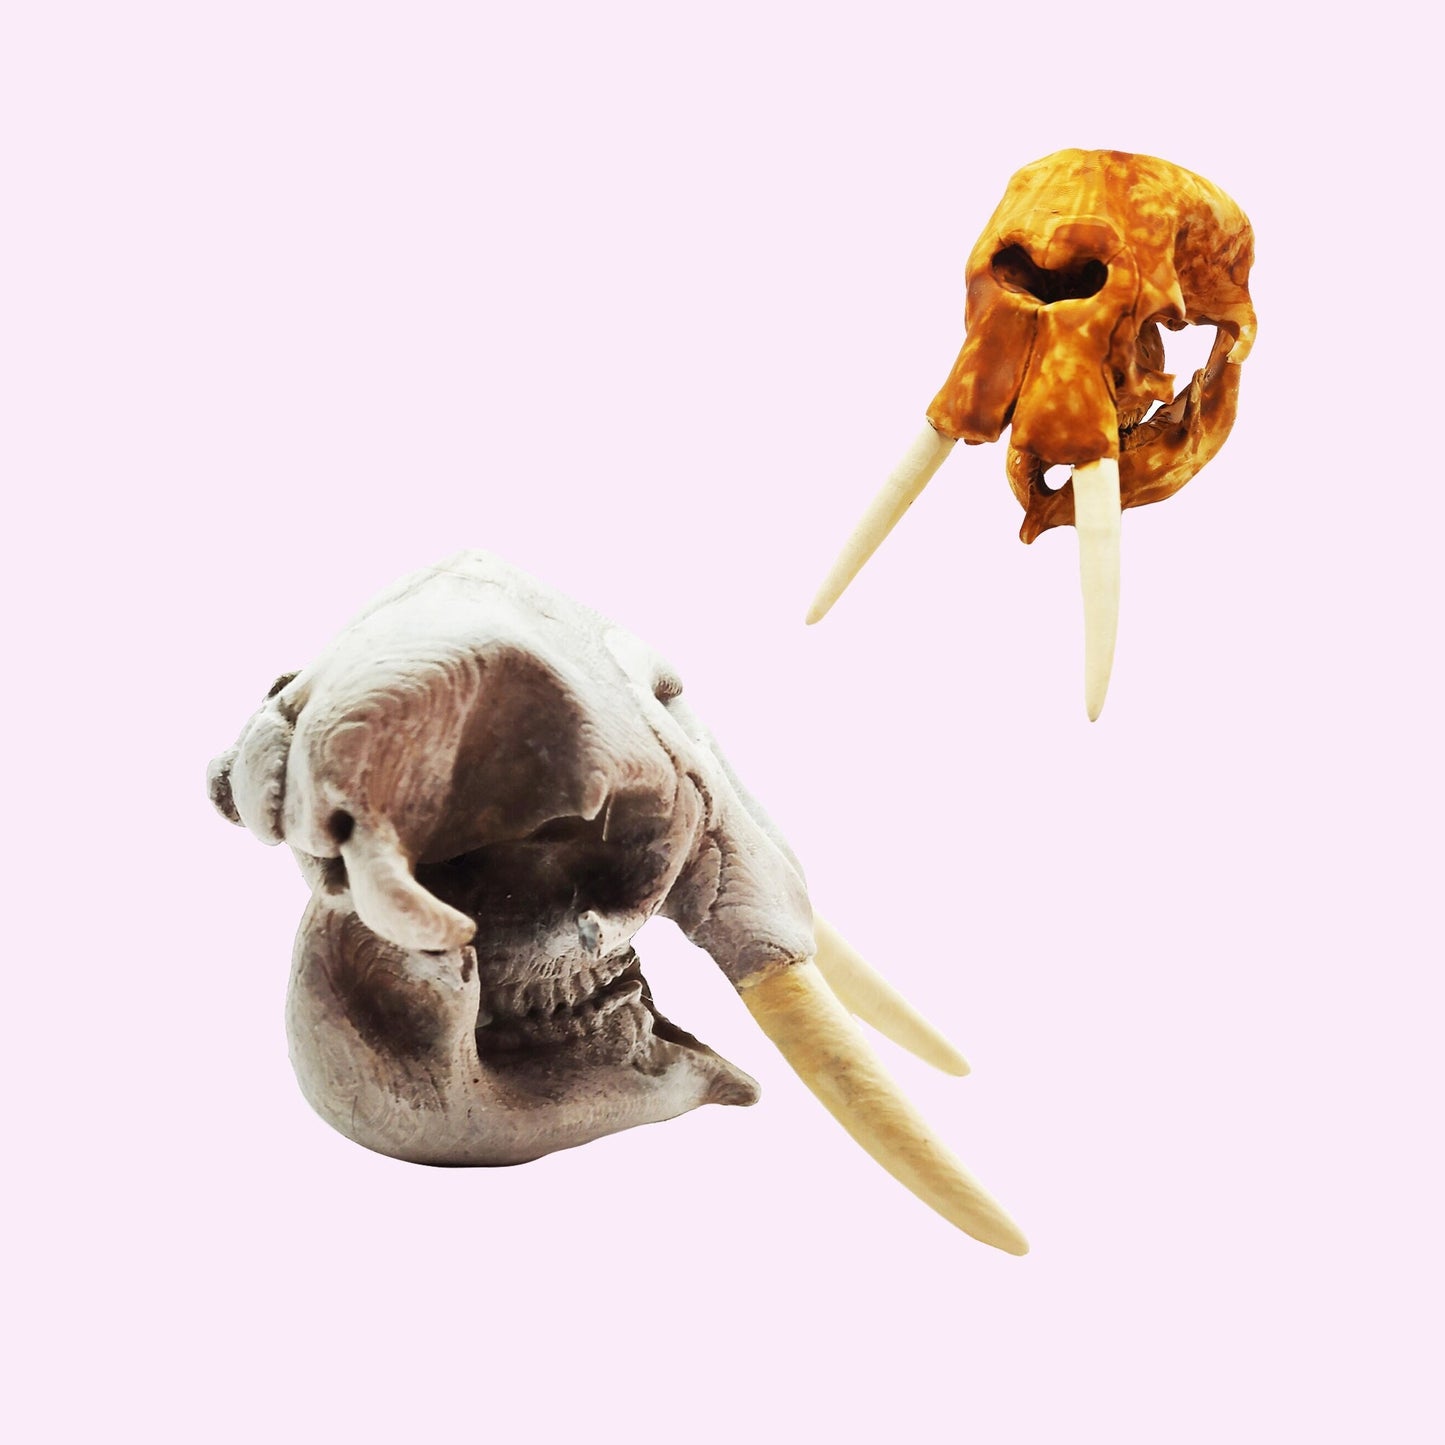 African Elephant Skull - 1:24 Scale skull replica for diorama, dollhouse, curio cabinet, miniature animal skulls (1 skull)